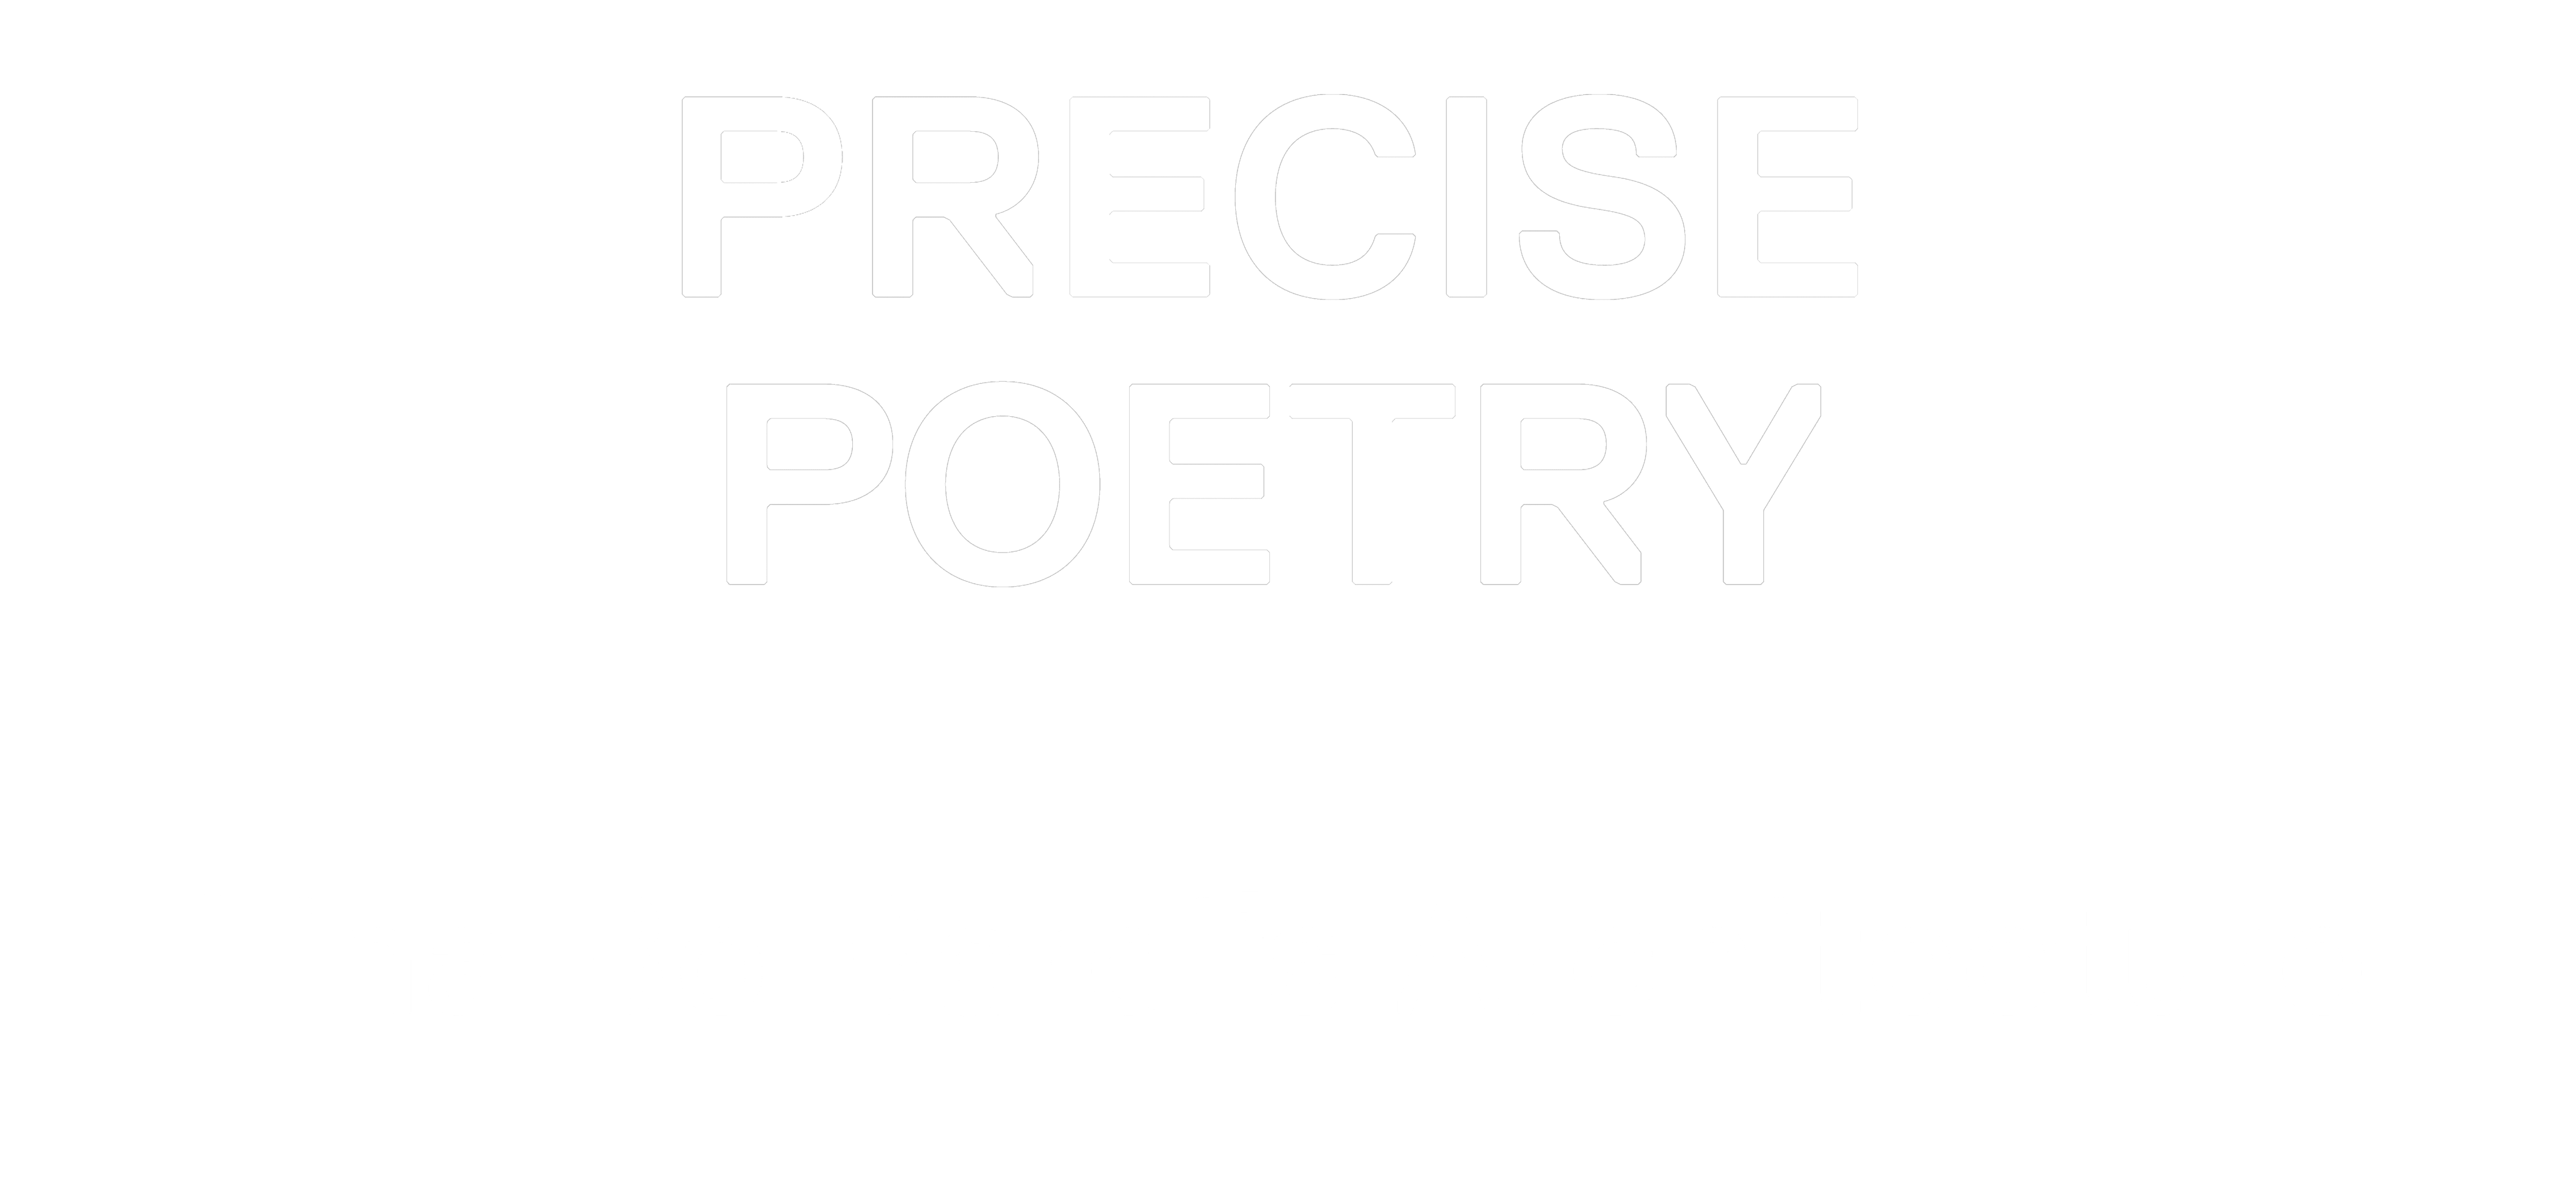 Precise Poetry - Lina Bo Bardi's Architecture